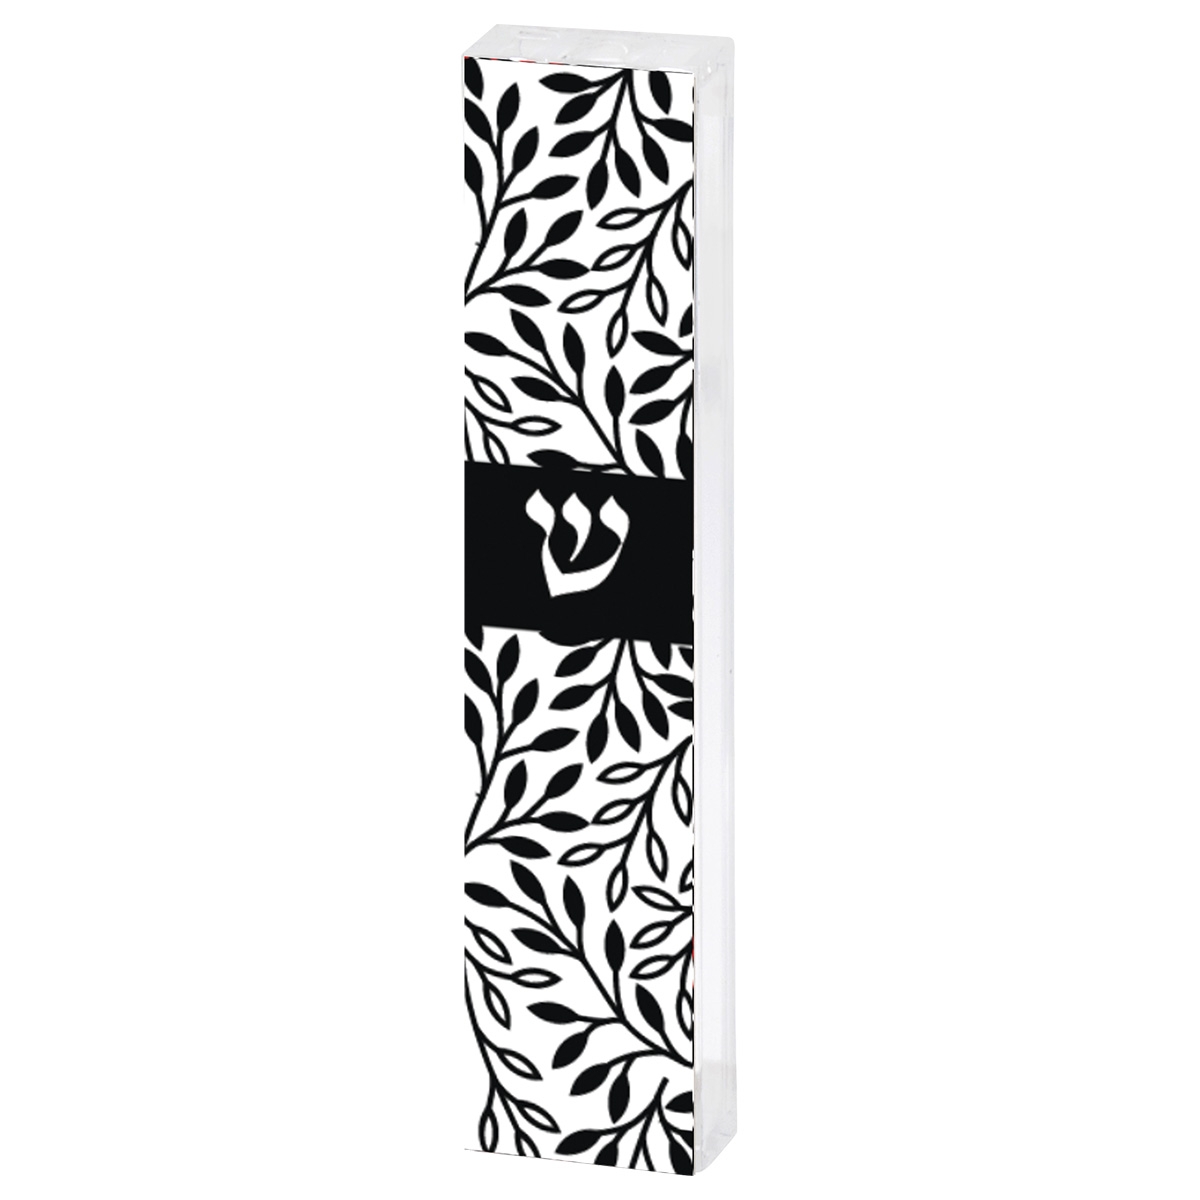 Stylish Black & White Mezuzah Case By Dorit Judaica (Choice of Designs) - 1